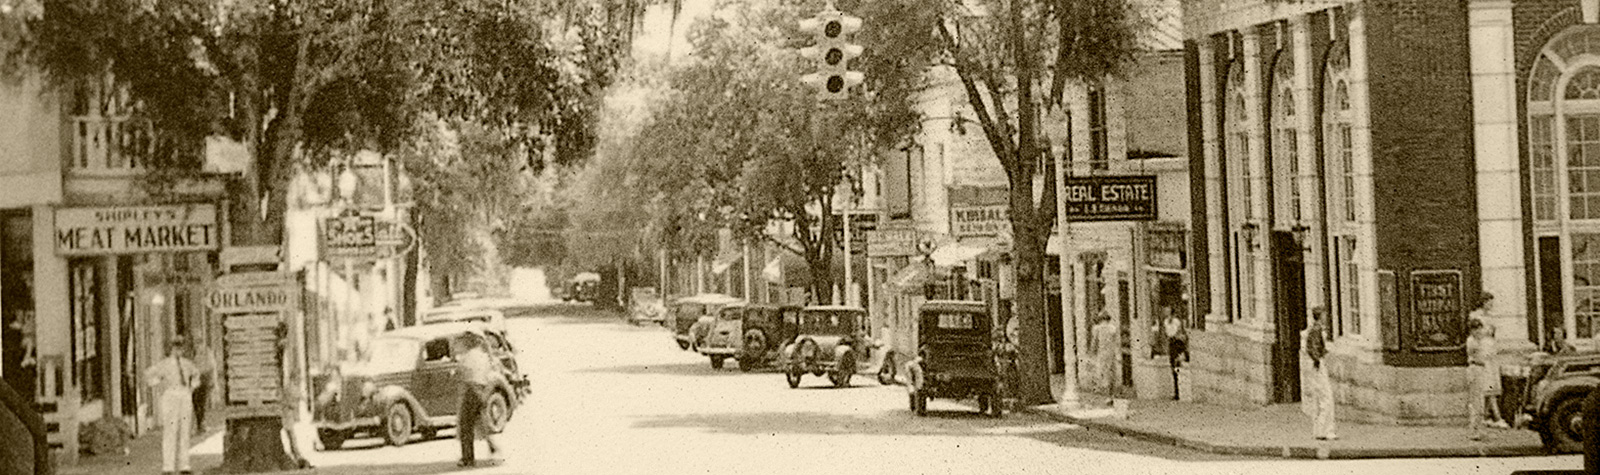 vintage photo of First National Bank of Mount Dora